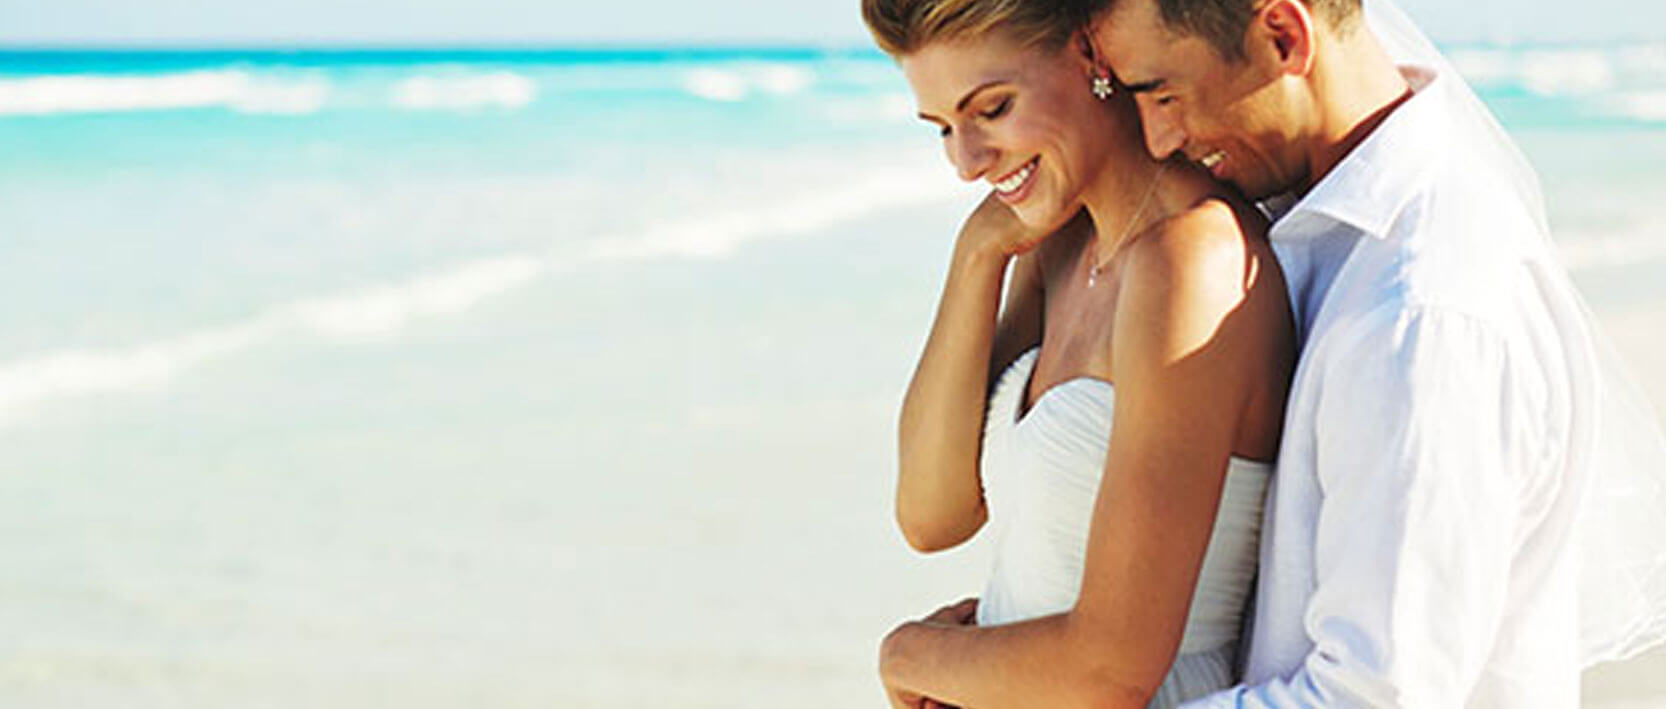 Hyatt Zilara Cancun Spa - Intimate Elegance Wedding Package